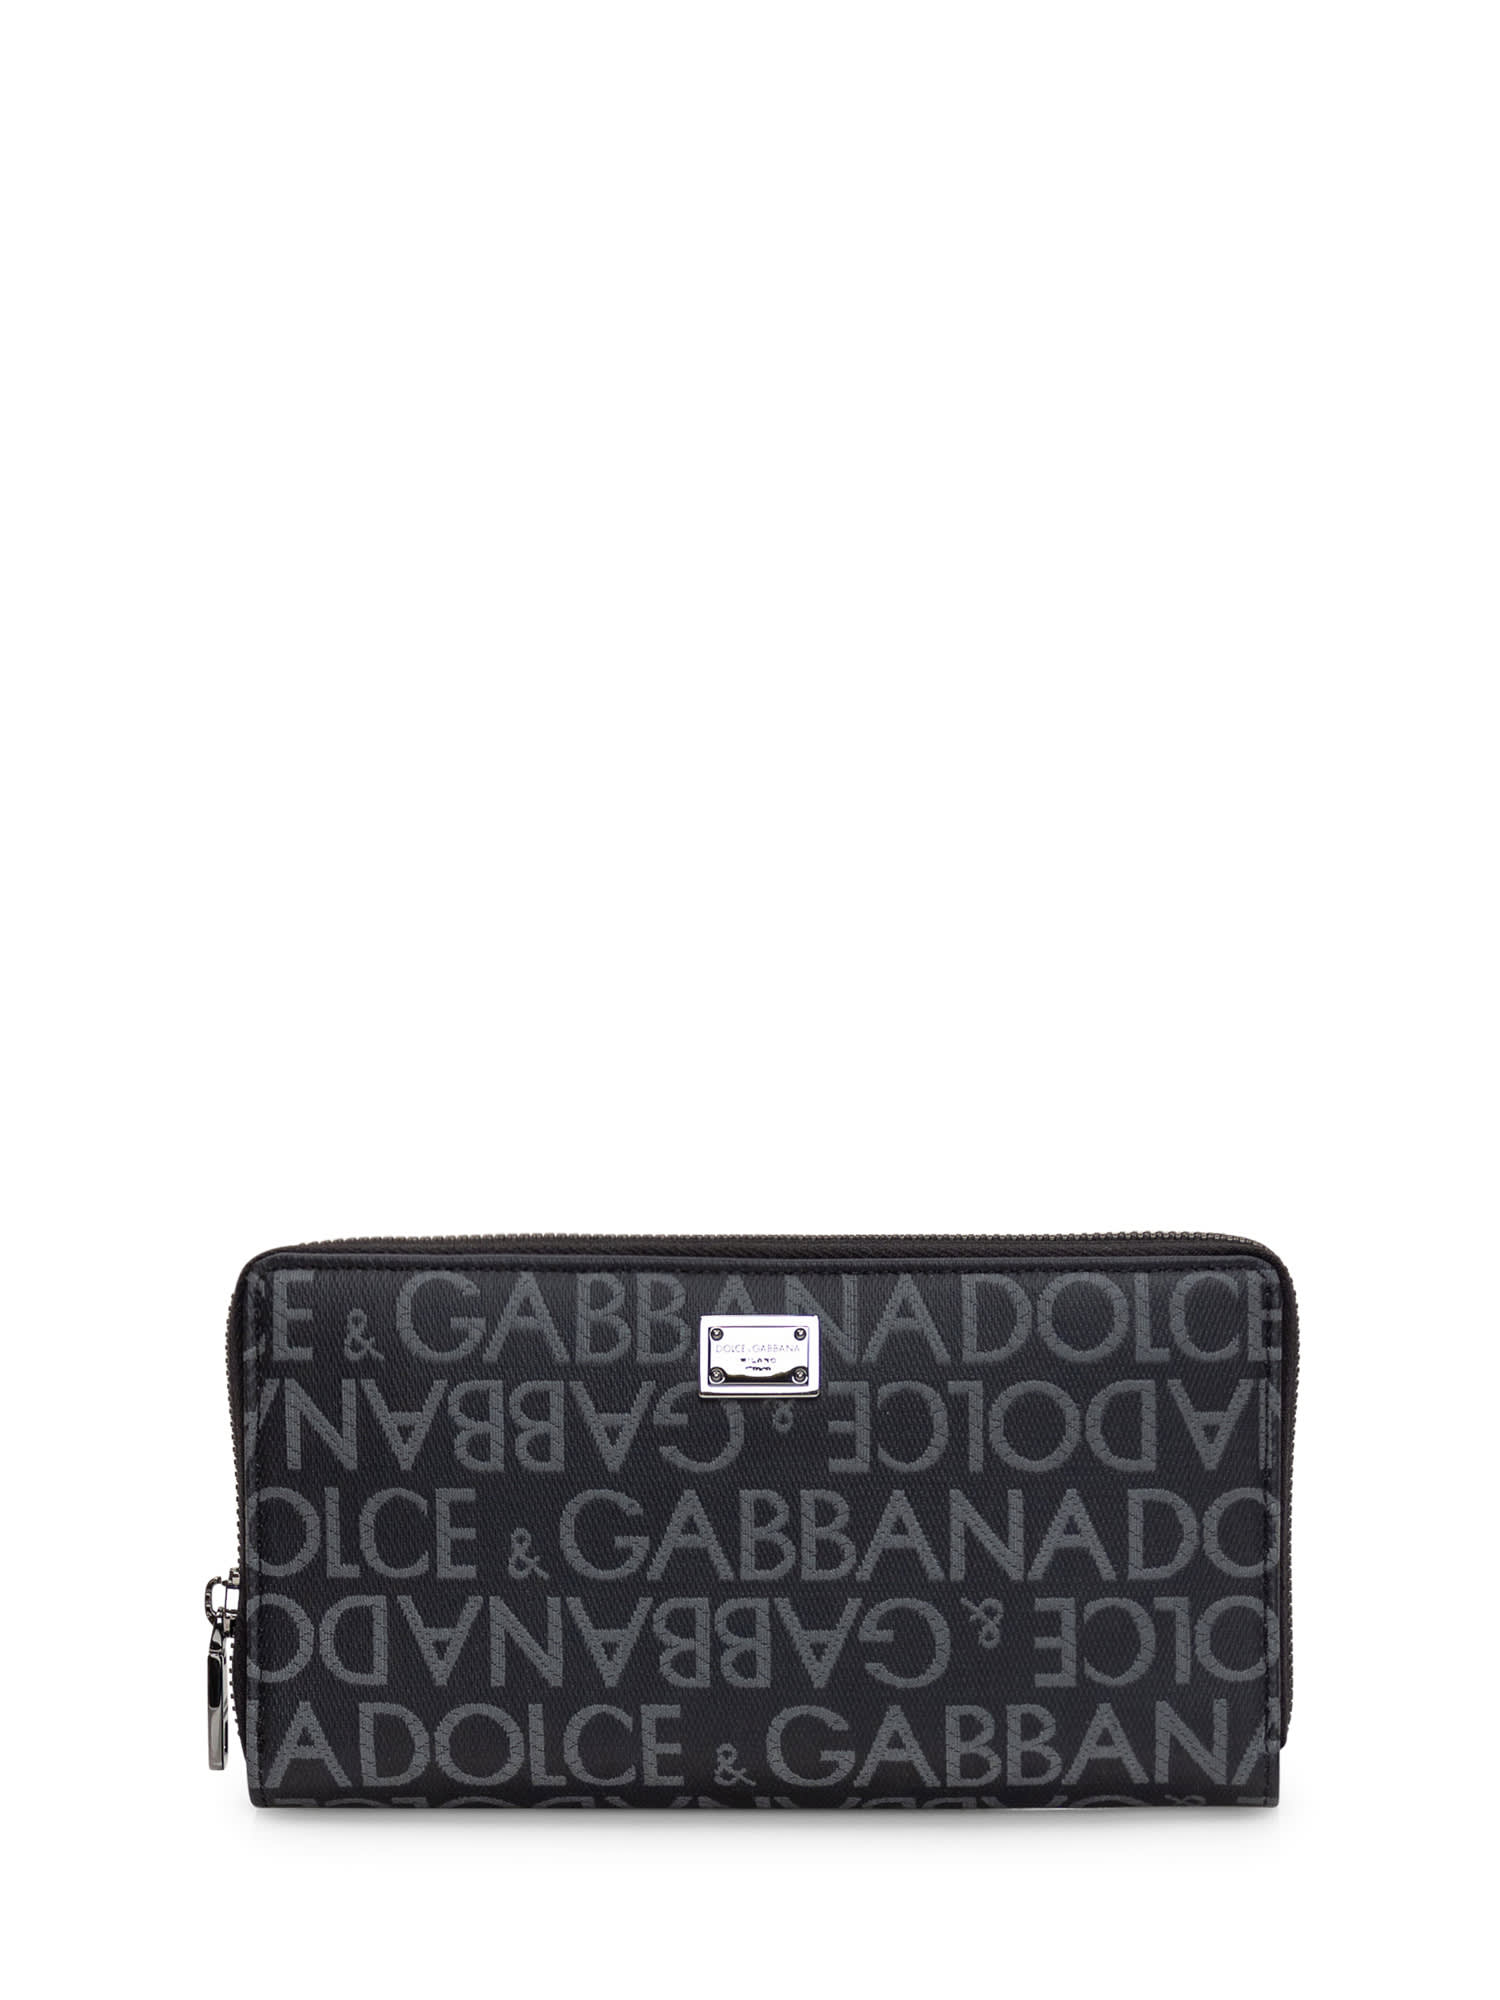 Dolce & Gabbana All-over Monogrammed Wallet